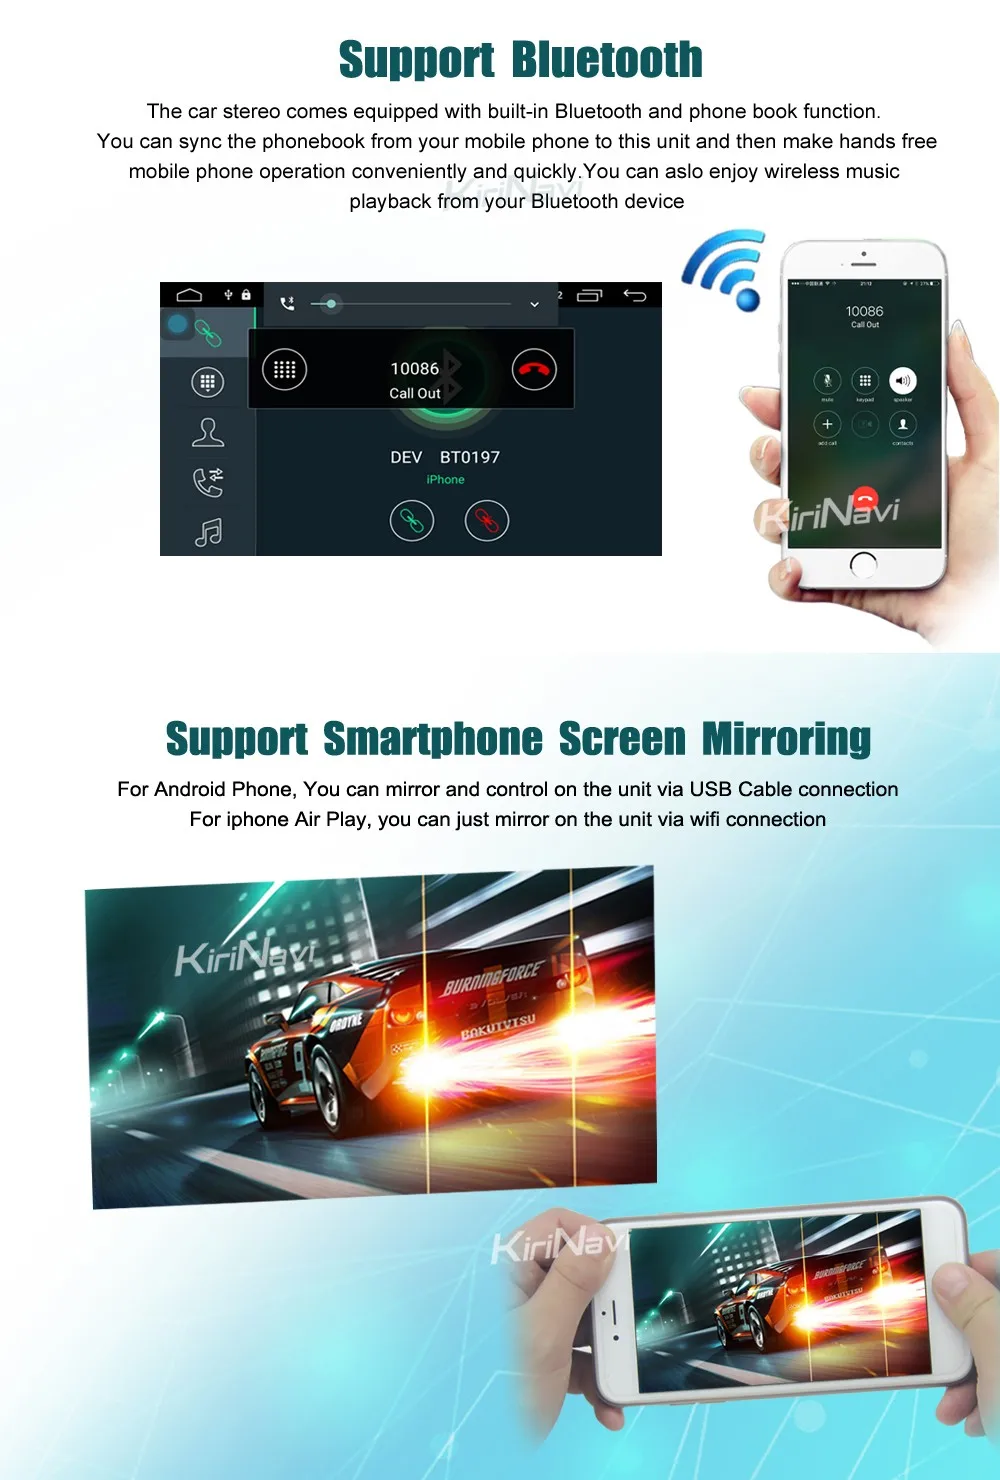 Kirinavi Wc-pt7407 8 Core Android Stereo For Peugeot 407 Display Screen ...